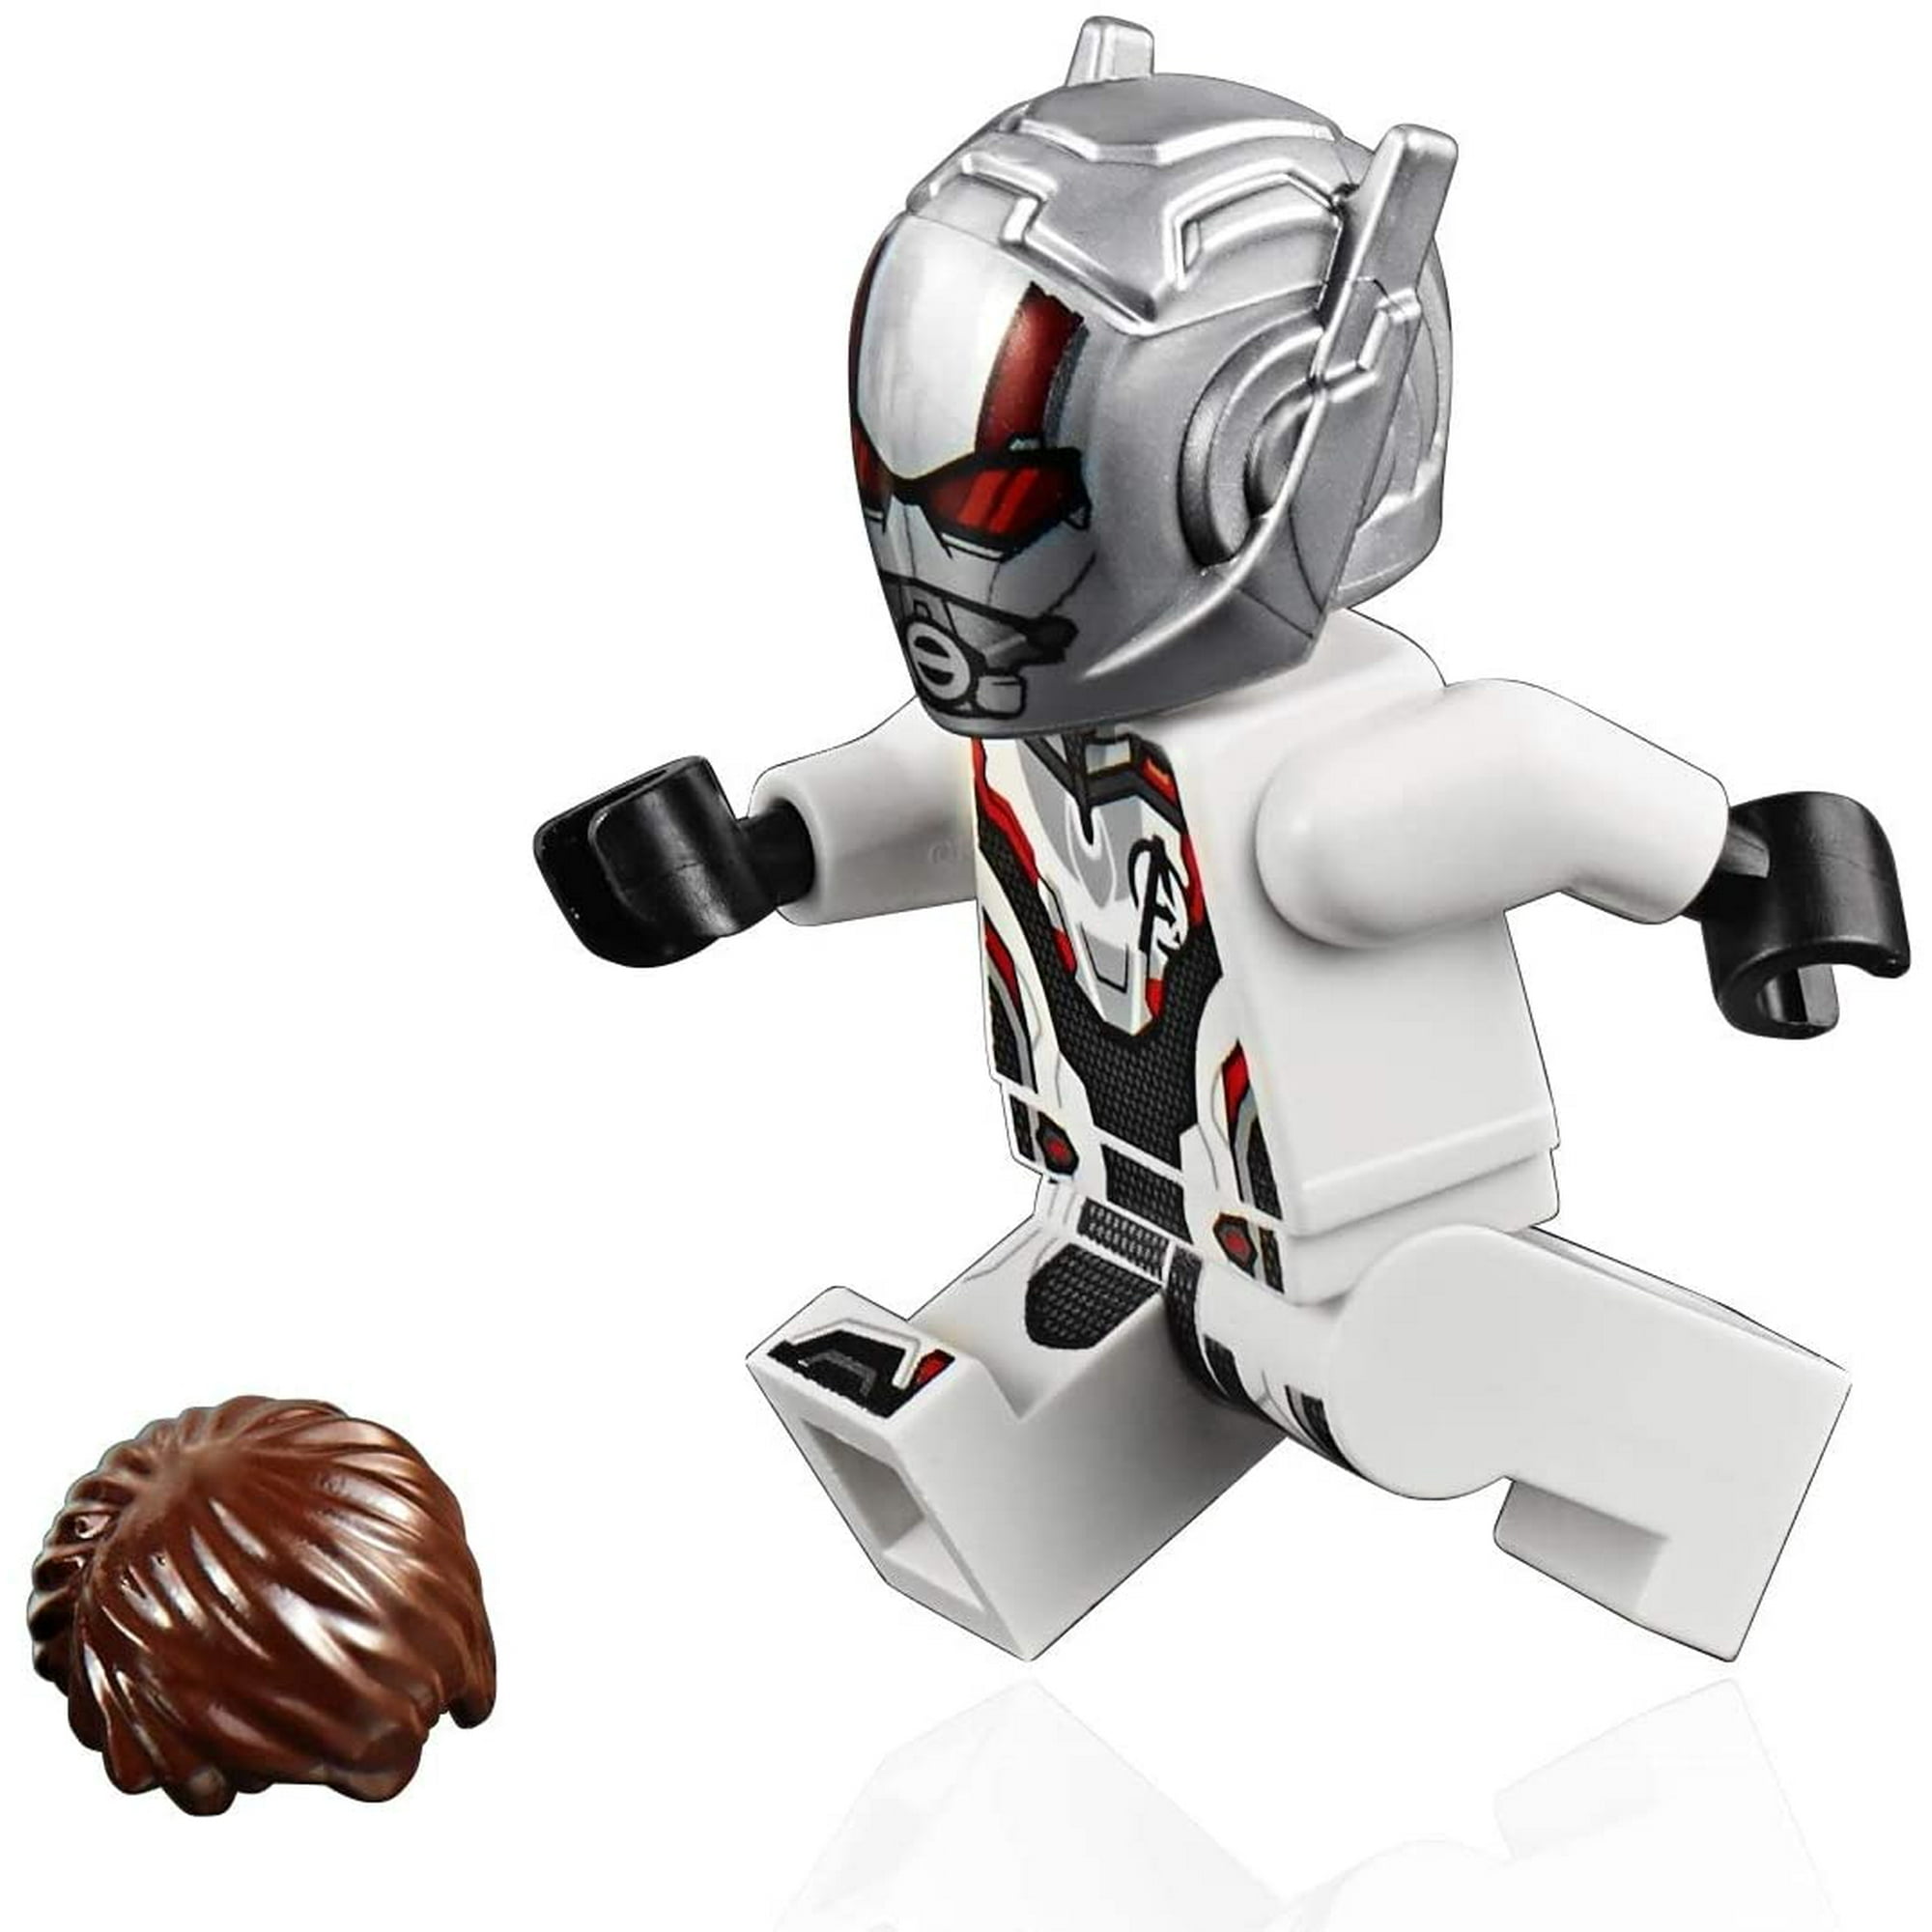 LEGO Marvel Avengers Endgame MiniFigure Ant-Man with Hair Piece Set 76124 |  Walmart Canada